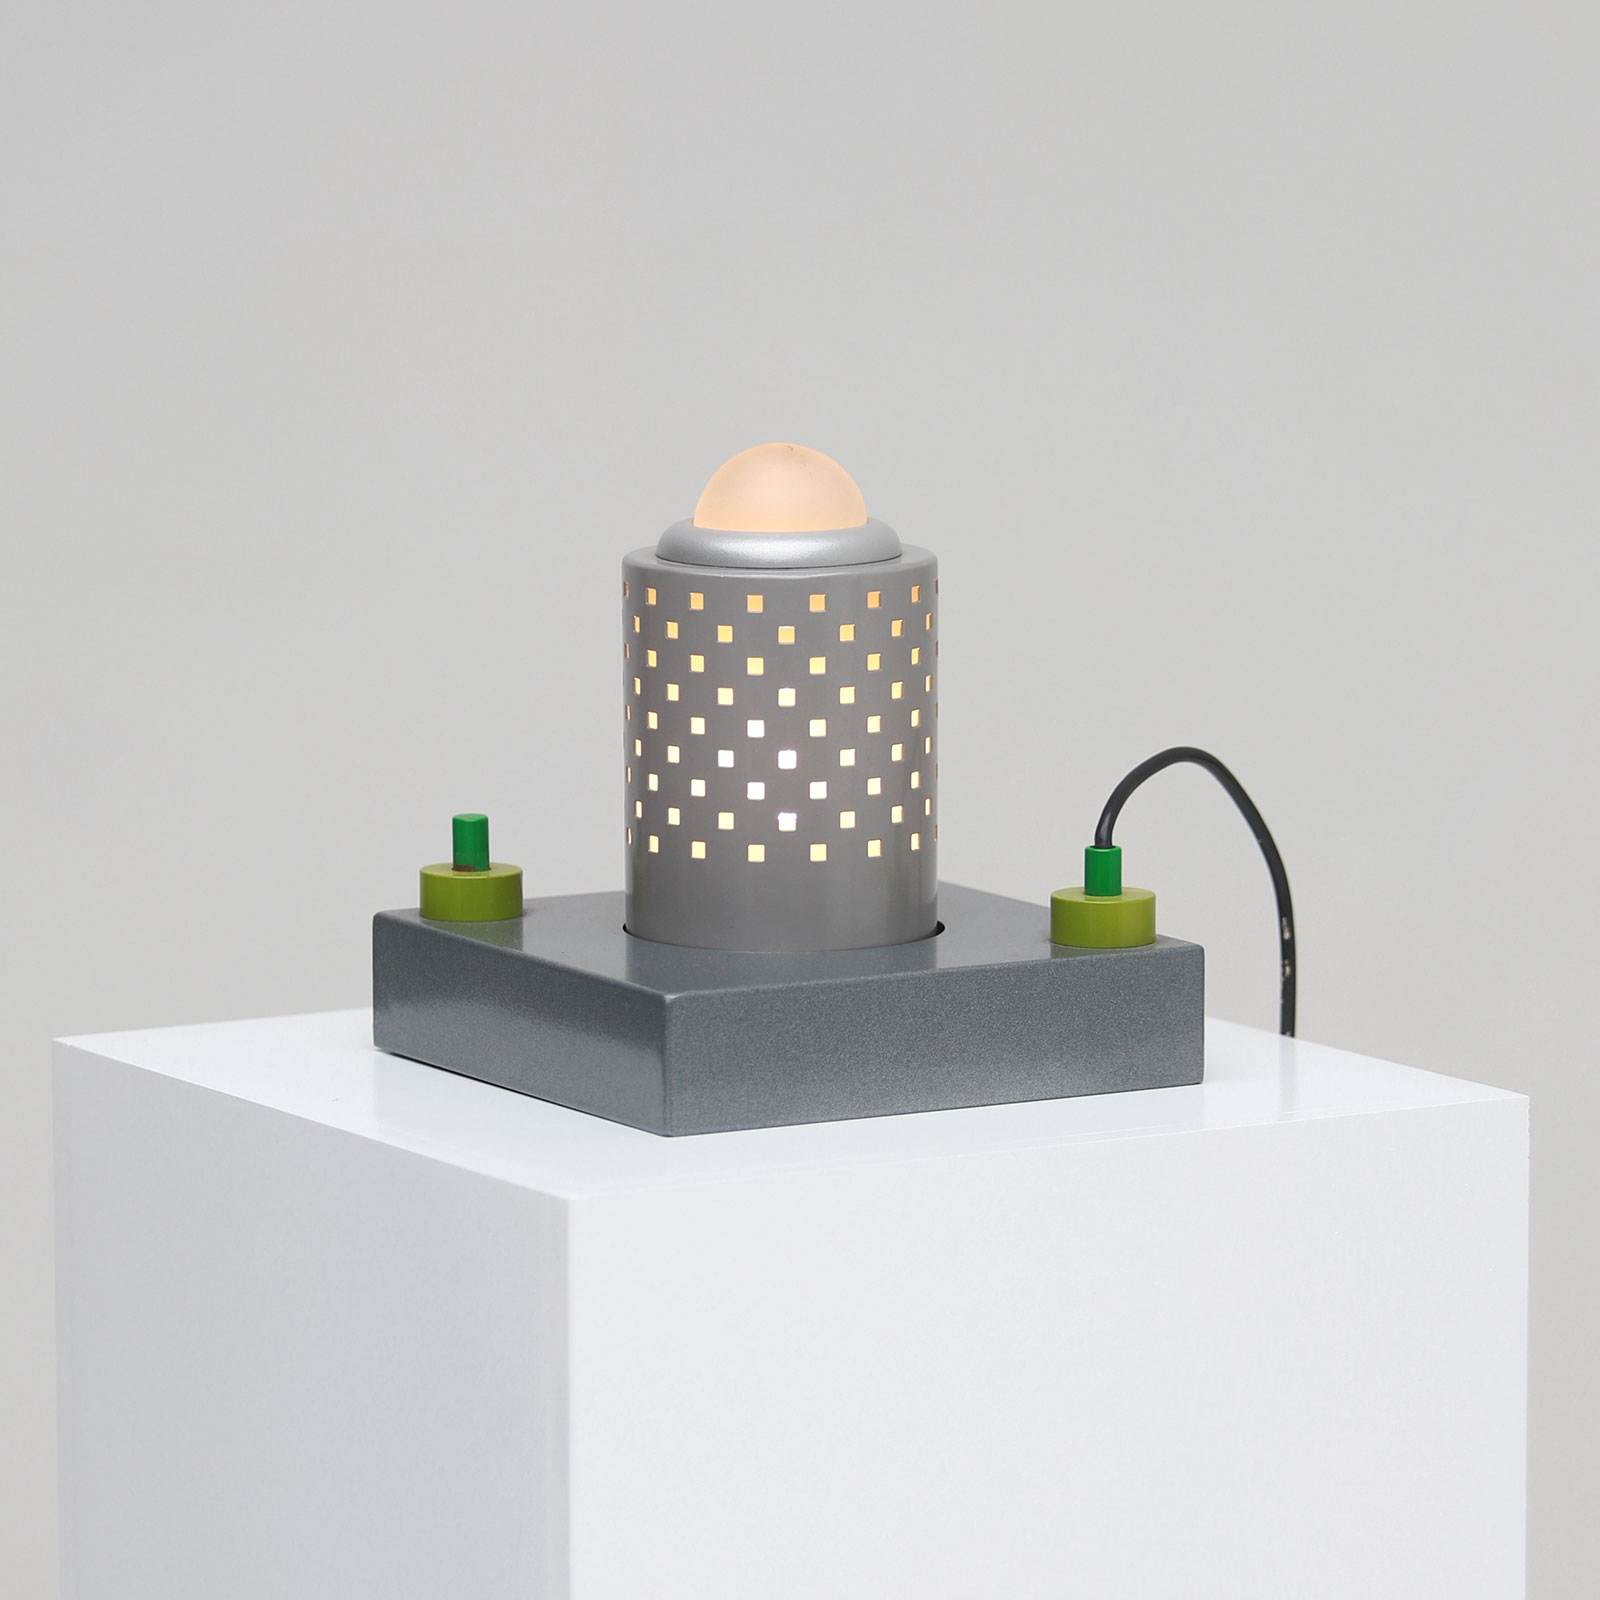 Matteo Thun Dieci Spargi table lamp